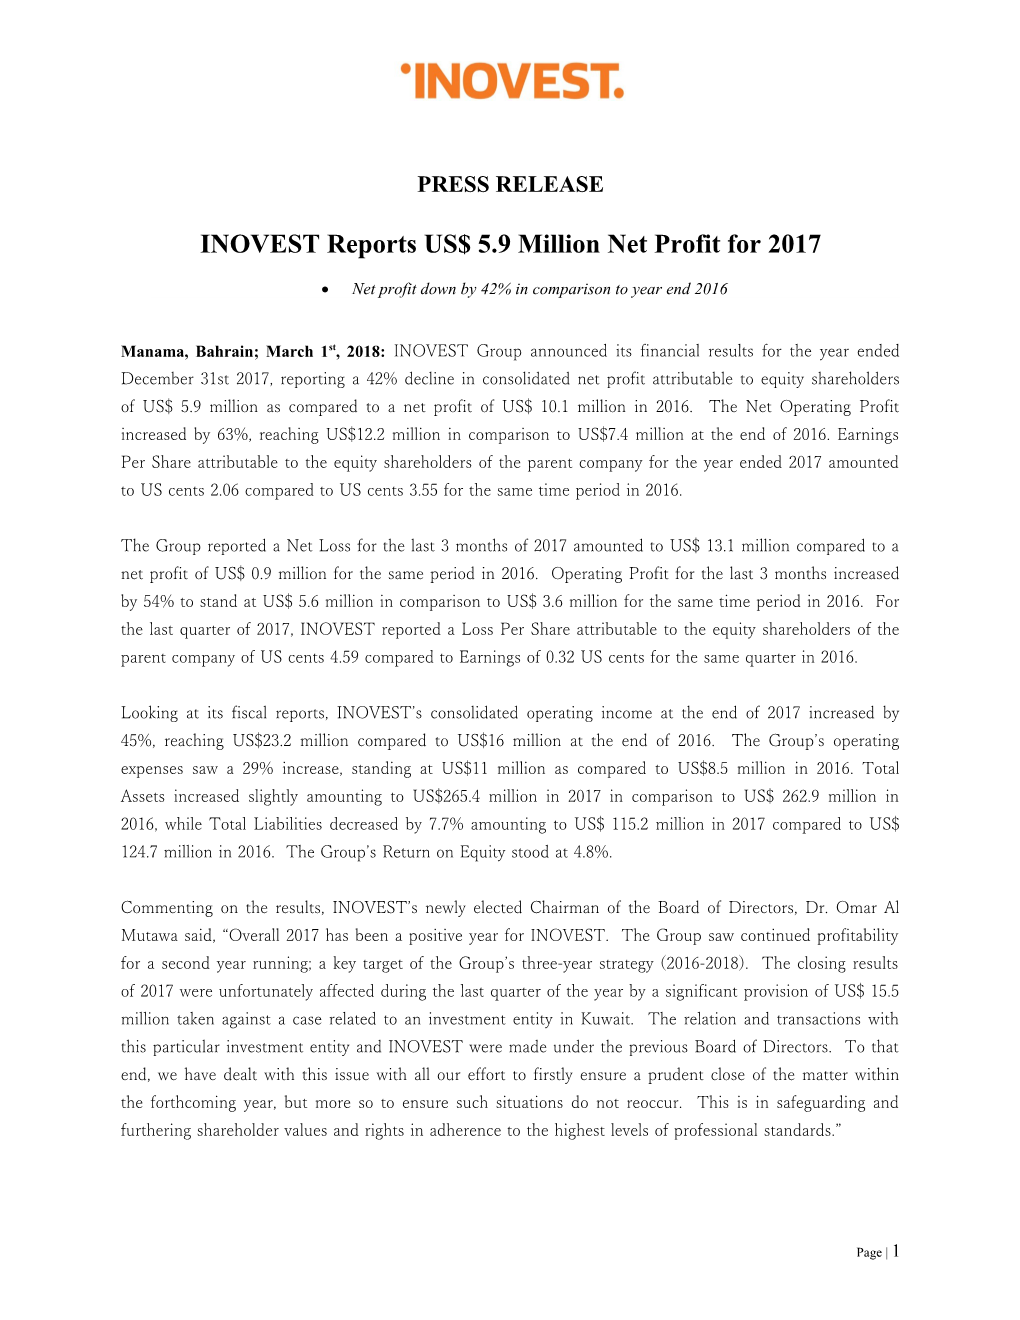 INOVEST Reports US$ 5.9Million Net Profit for 2017